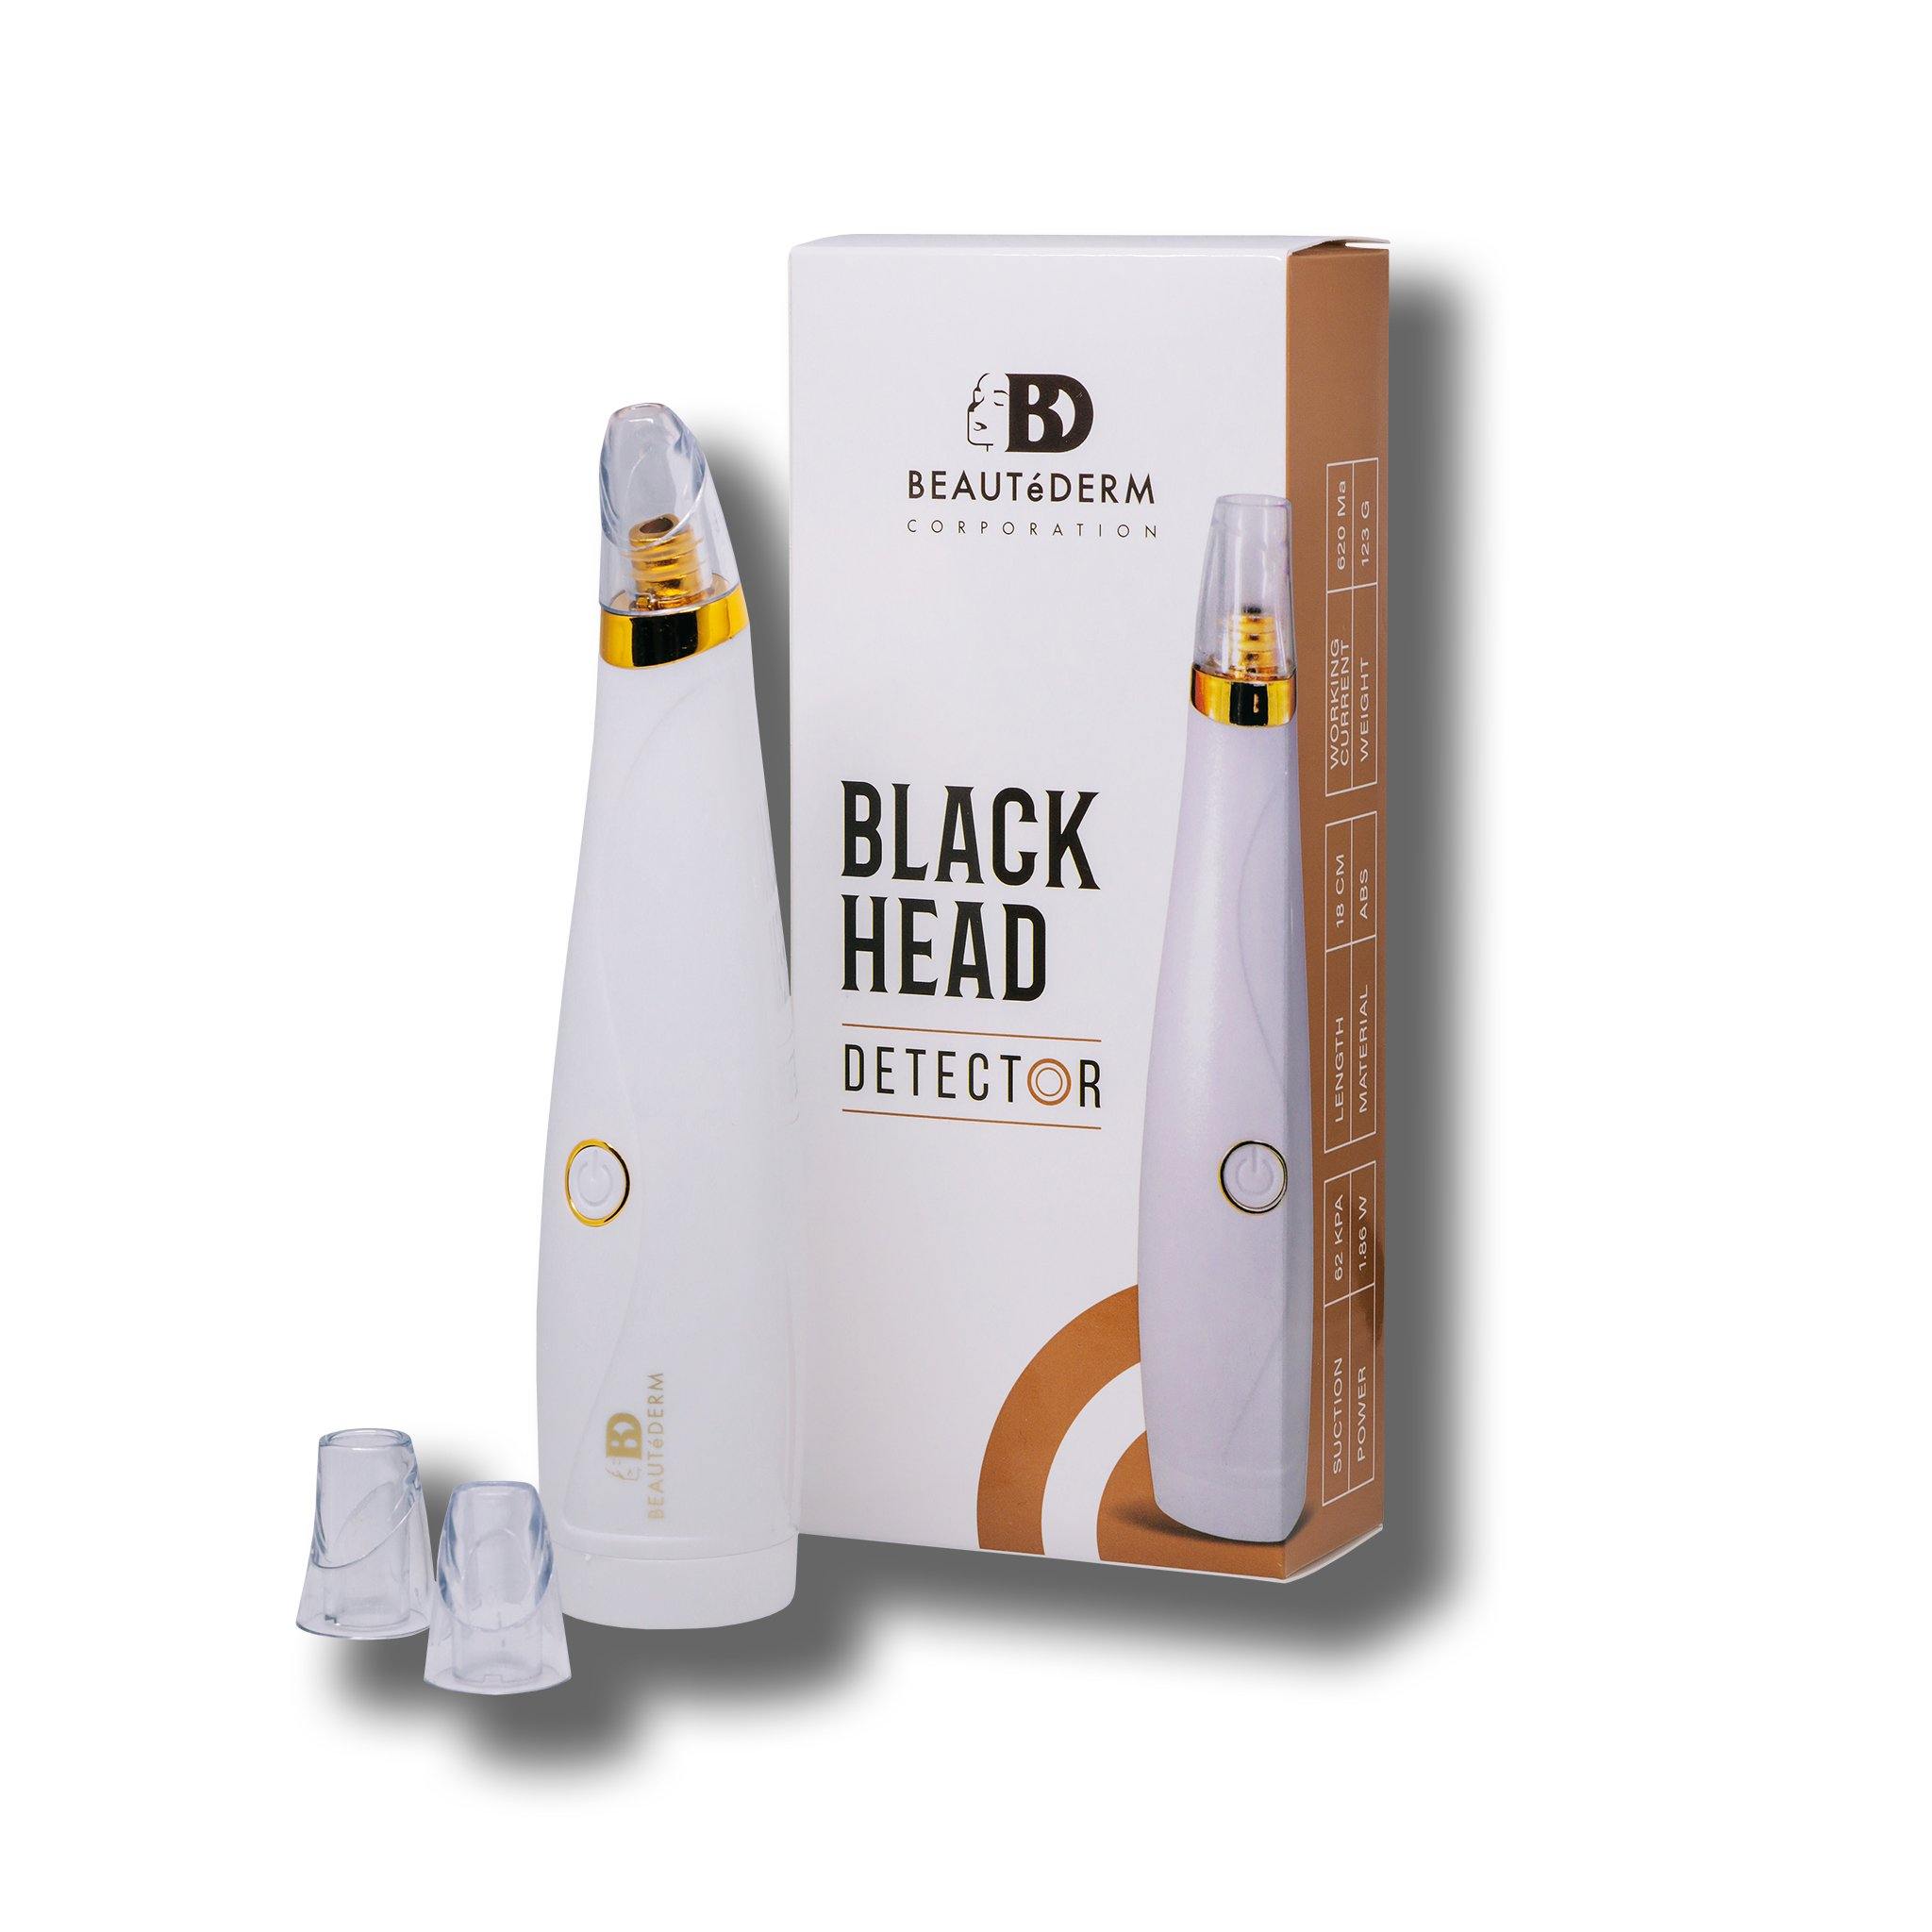 Blackhead Detector, by Beautederm